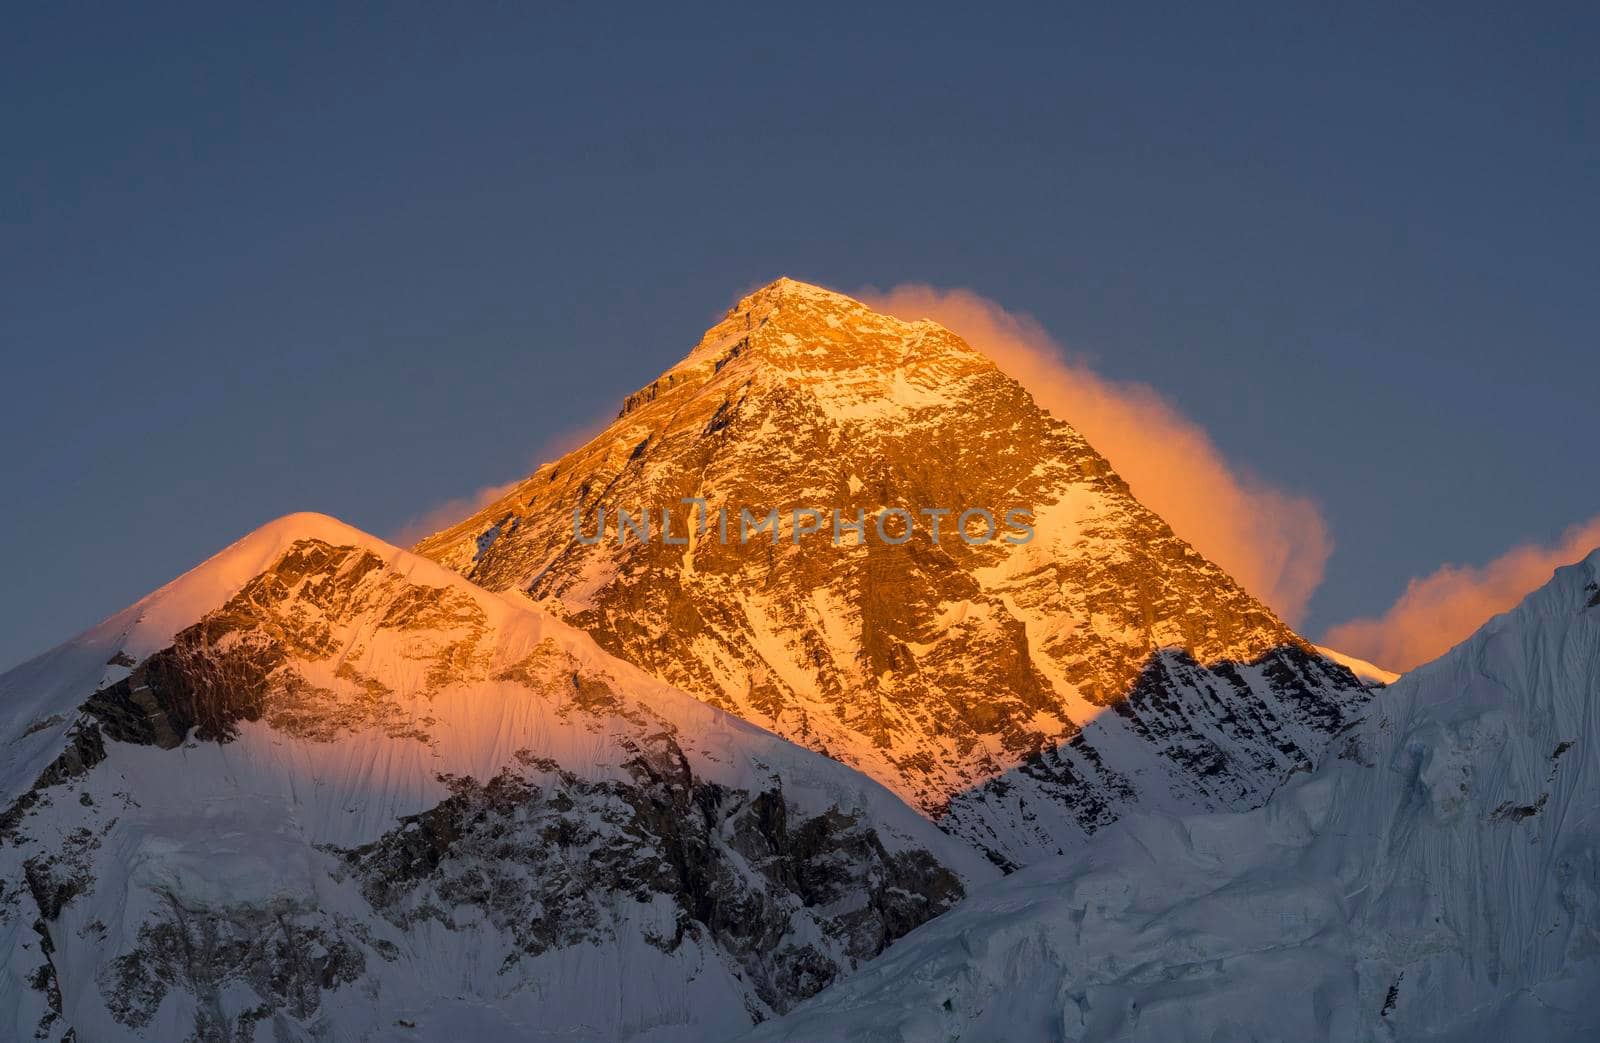 Everest summit or peak at sunset or sunrise. Everest base camp trek, tourism in Nepal